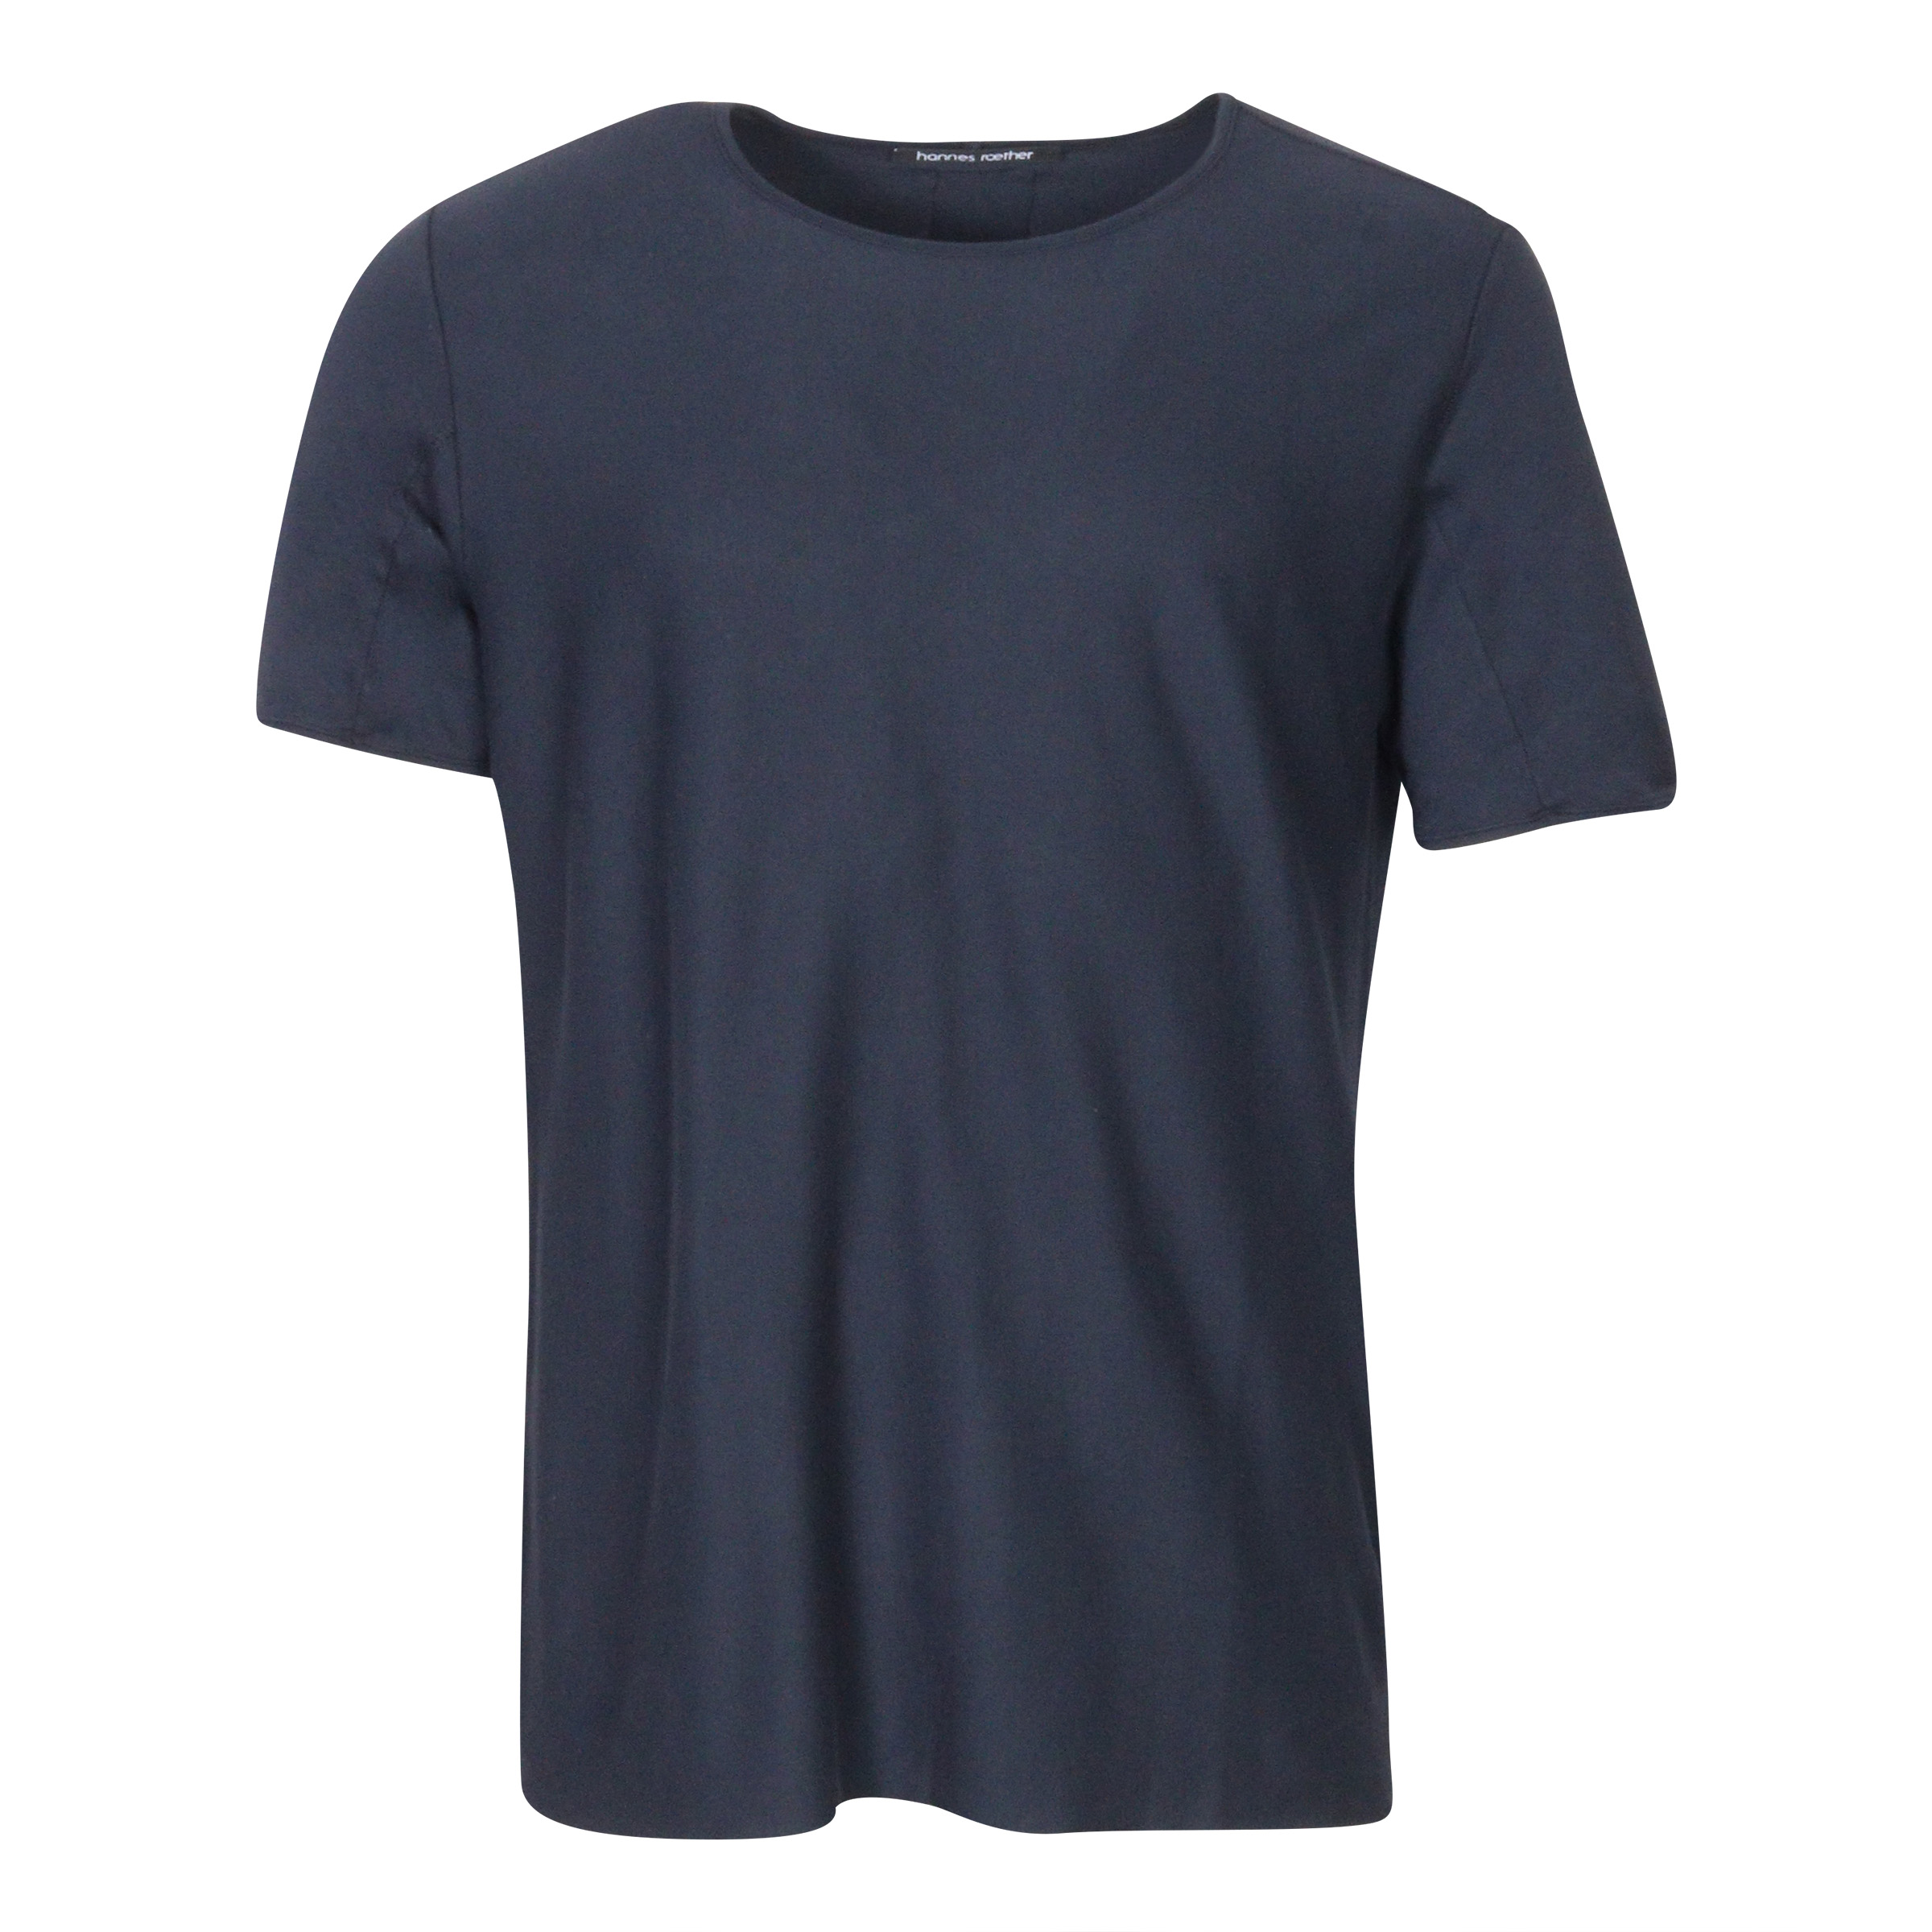 Hannes Roether T-Shirt Dark Blue